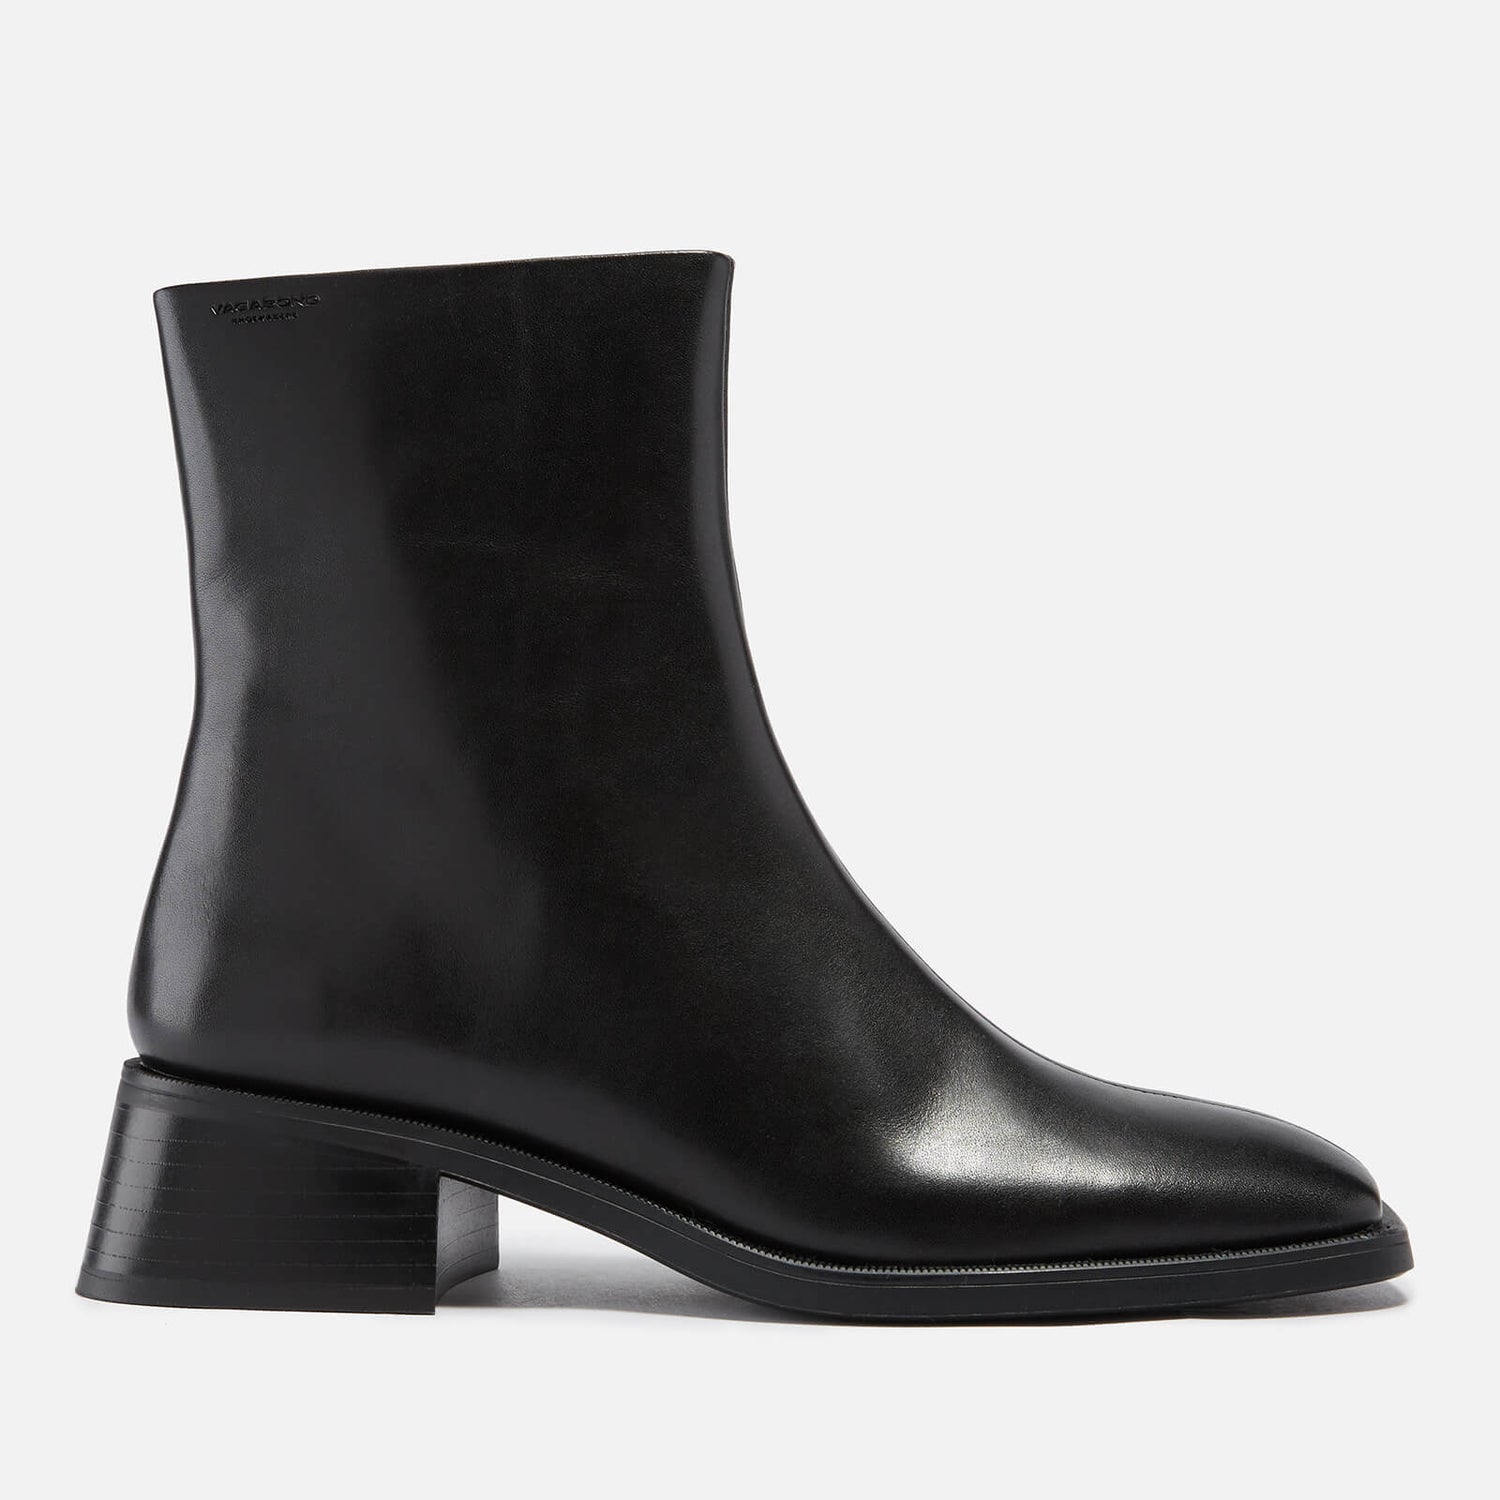 Vagabond Blanca Leather Ankle Boots - UK 4